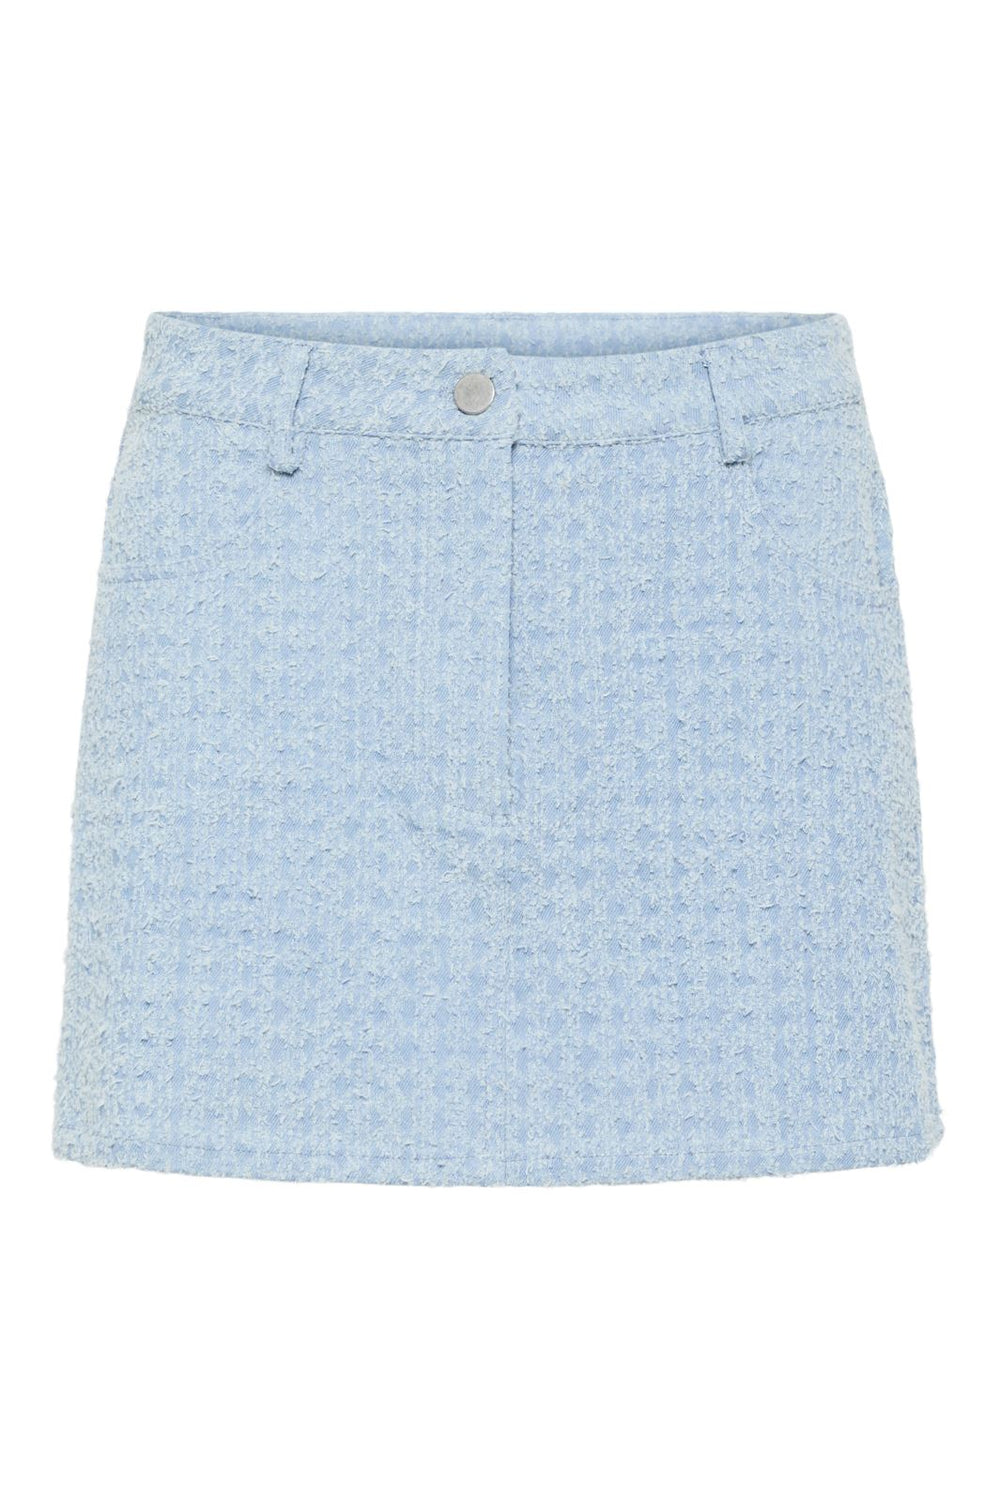 Pieces - Pcjacy Mini Denim Skirt Jit - 4740198 Light Blue Denim